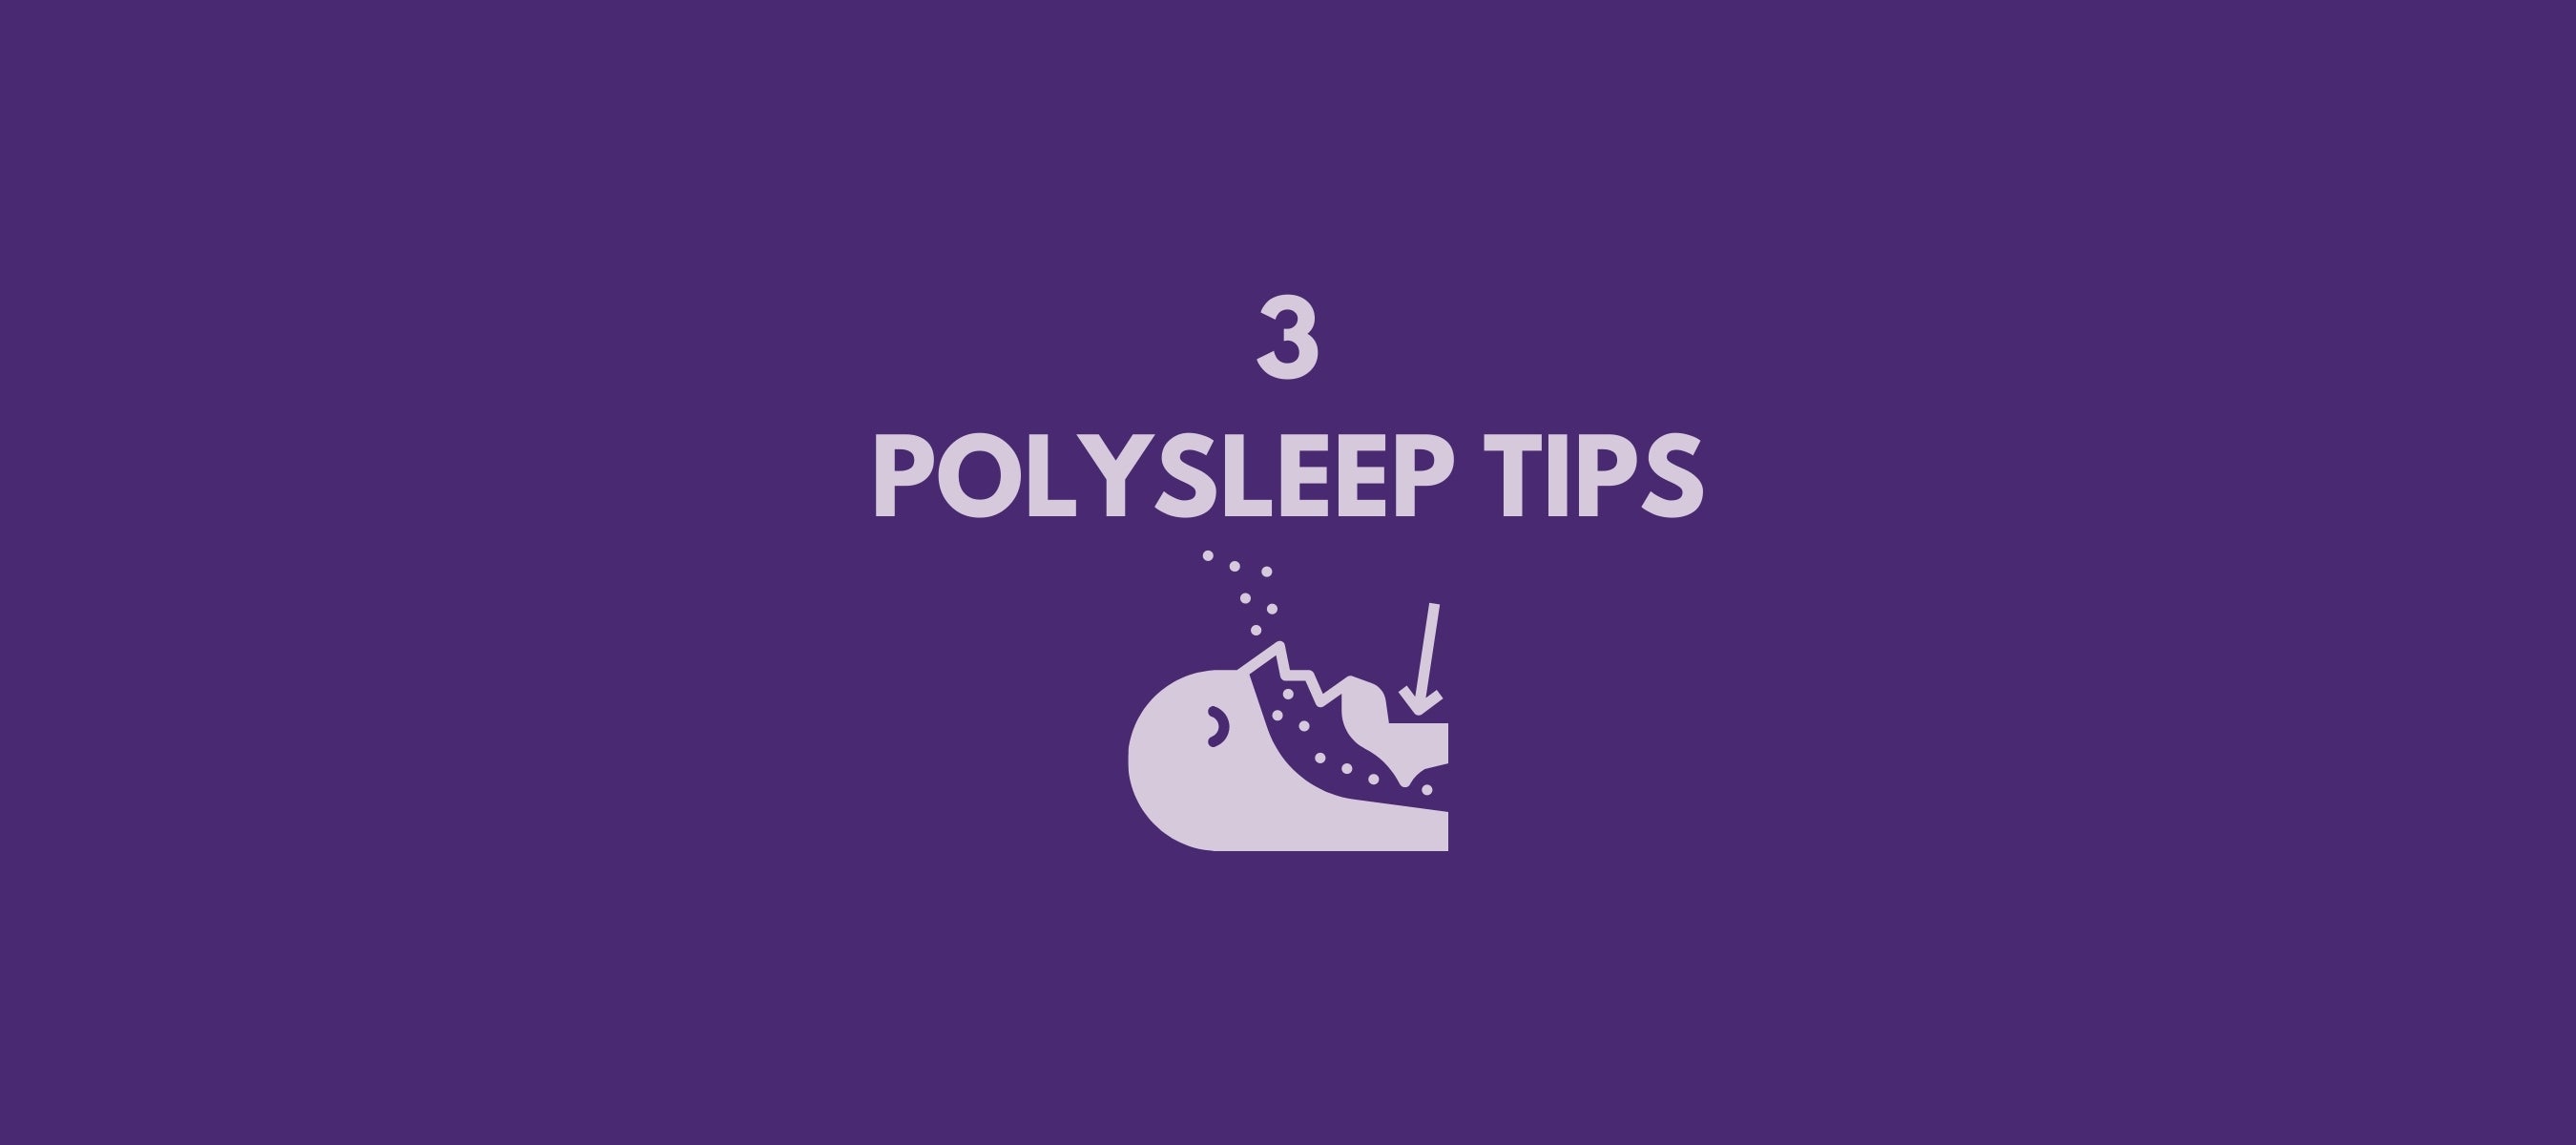 Three Polysleep tips for sleep apnea